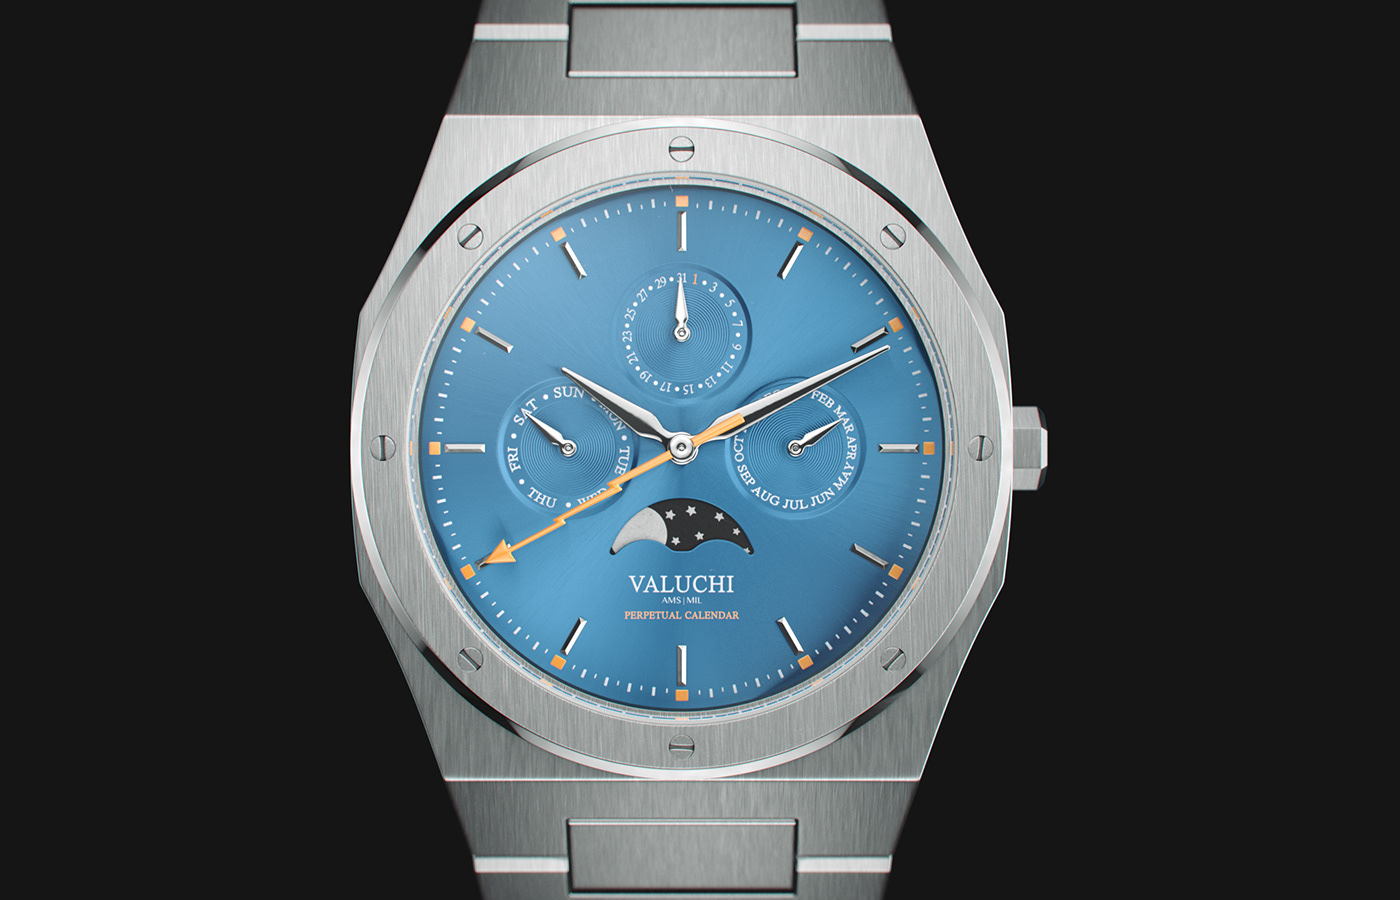 3d watch Fashion  luxury Render substance substance designer  watch watch render watch 3D watch cgi